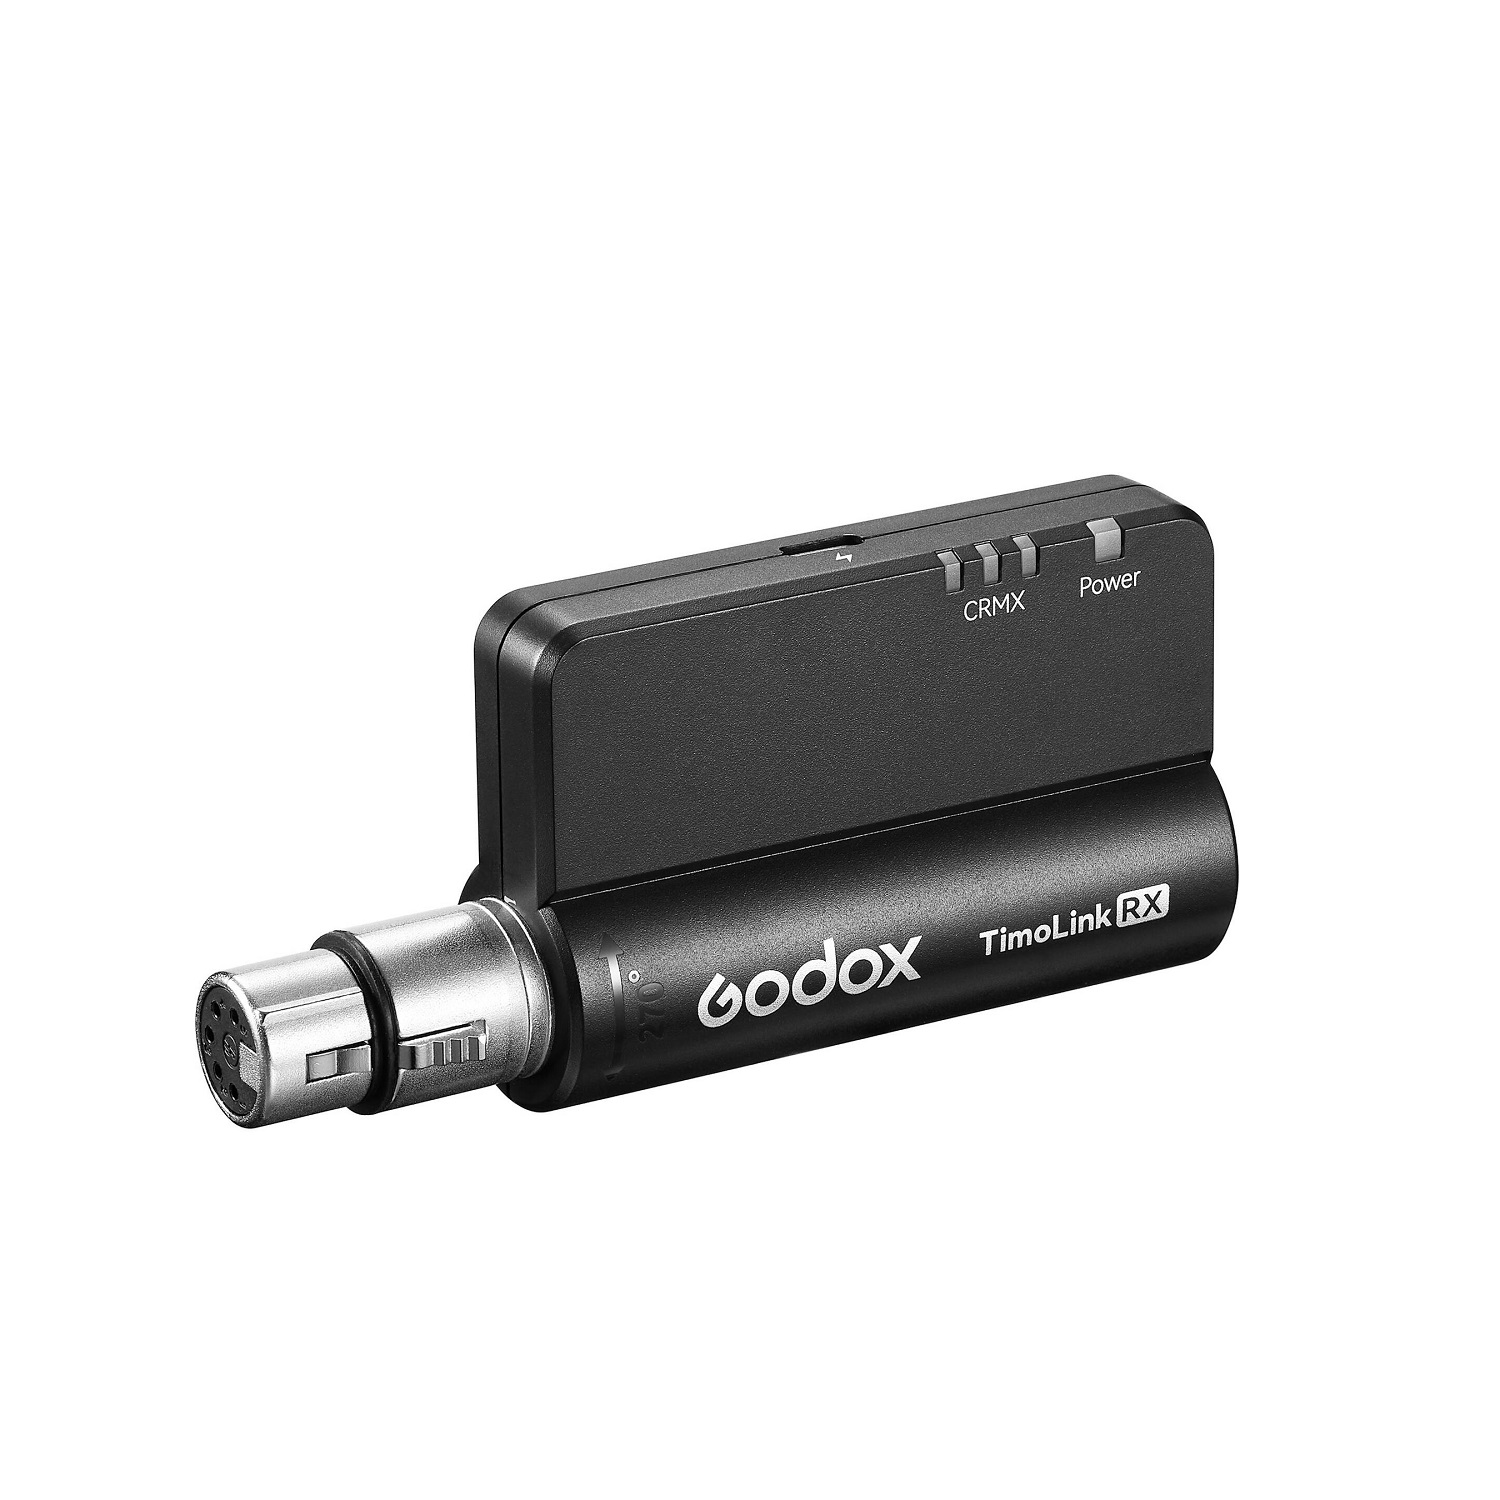  DMX  Godox TimoLink RX    Ultra-mart